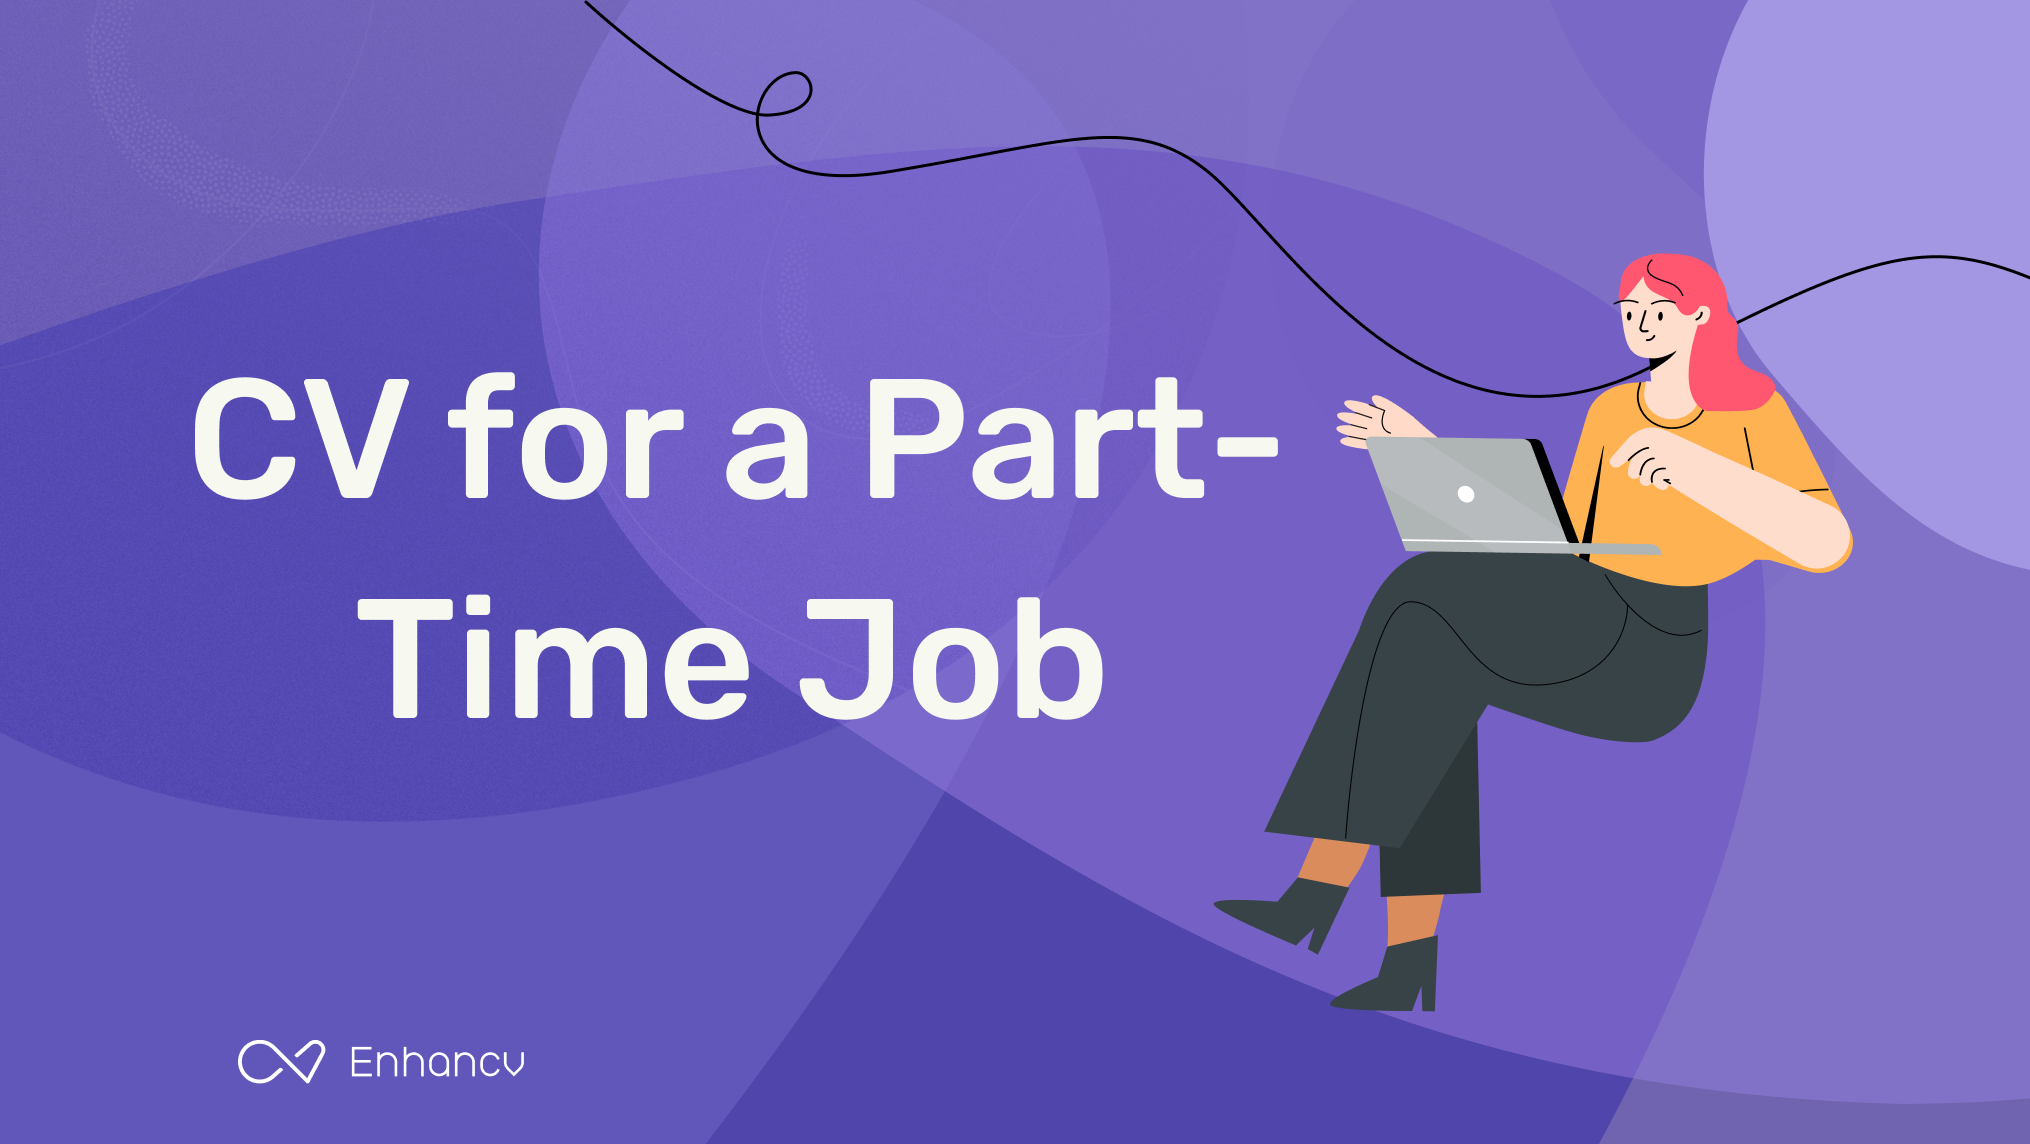 How to Craft an Effective CV for a Part-Time Job | Enhancv